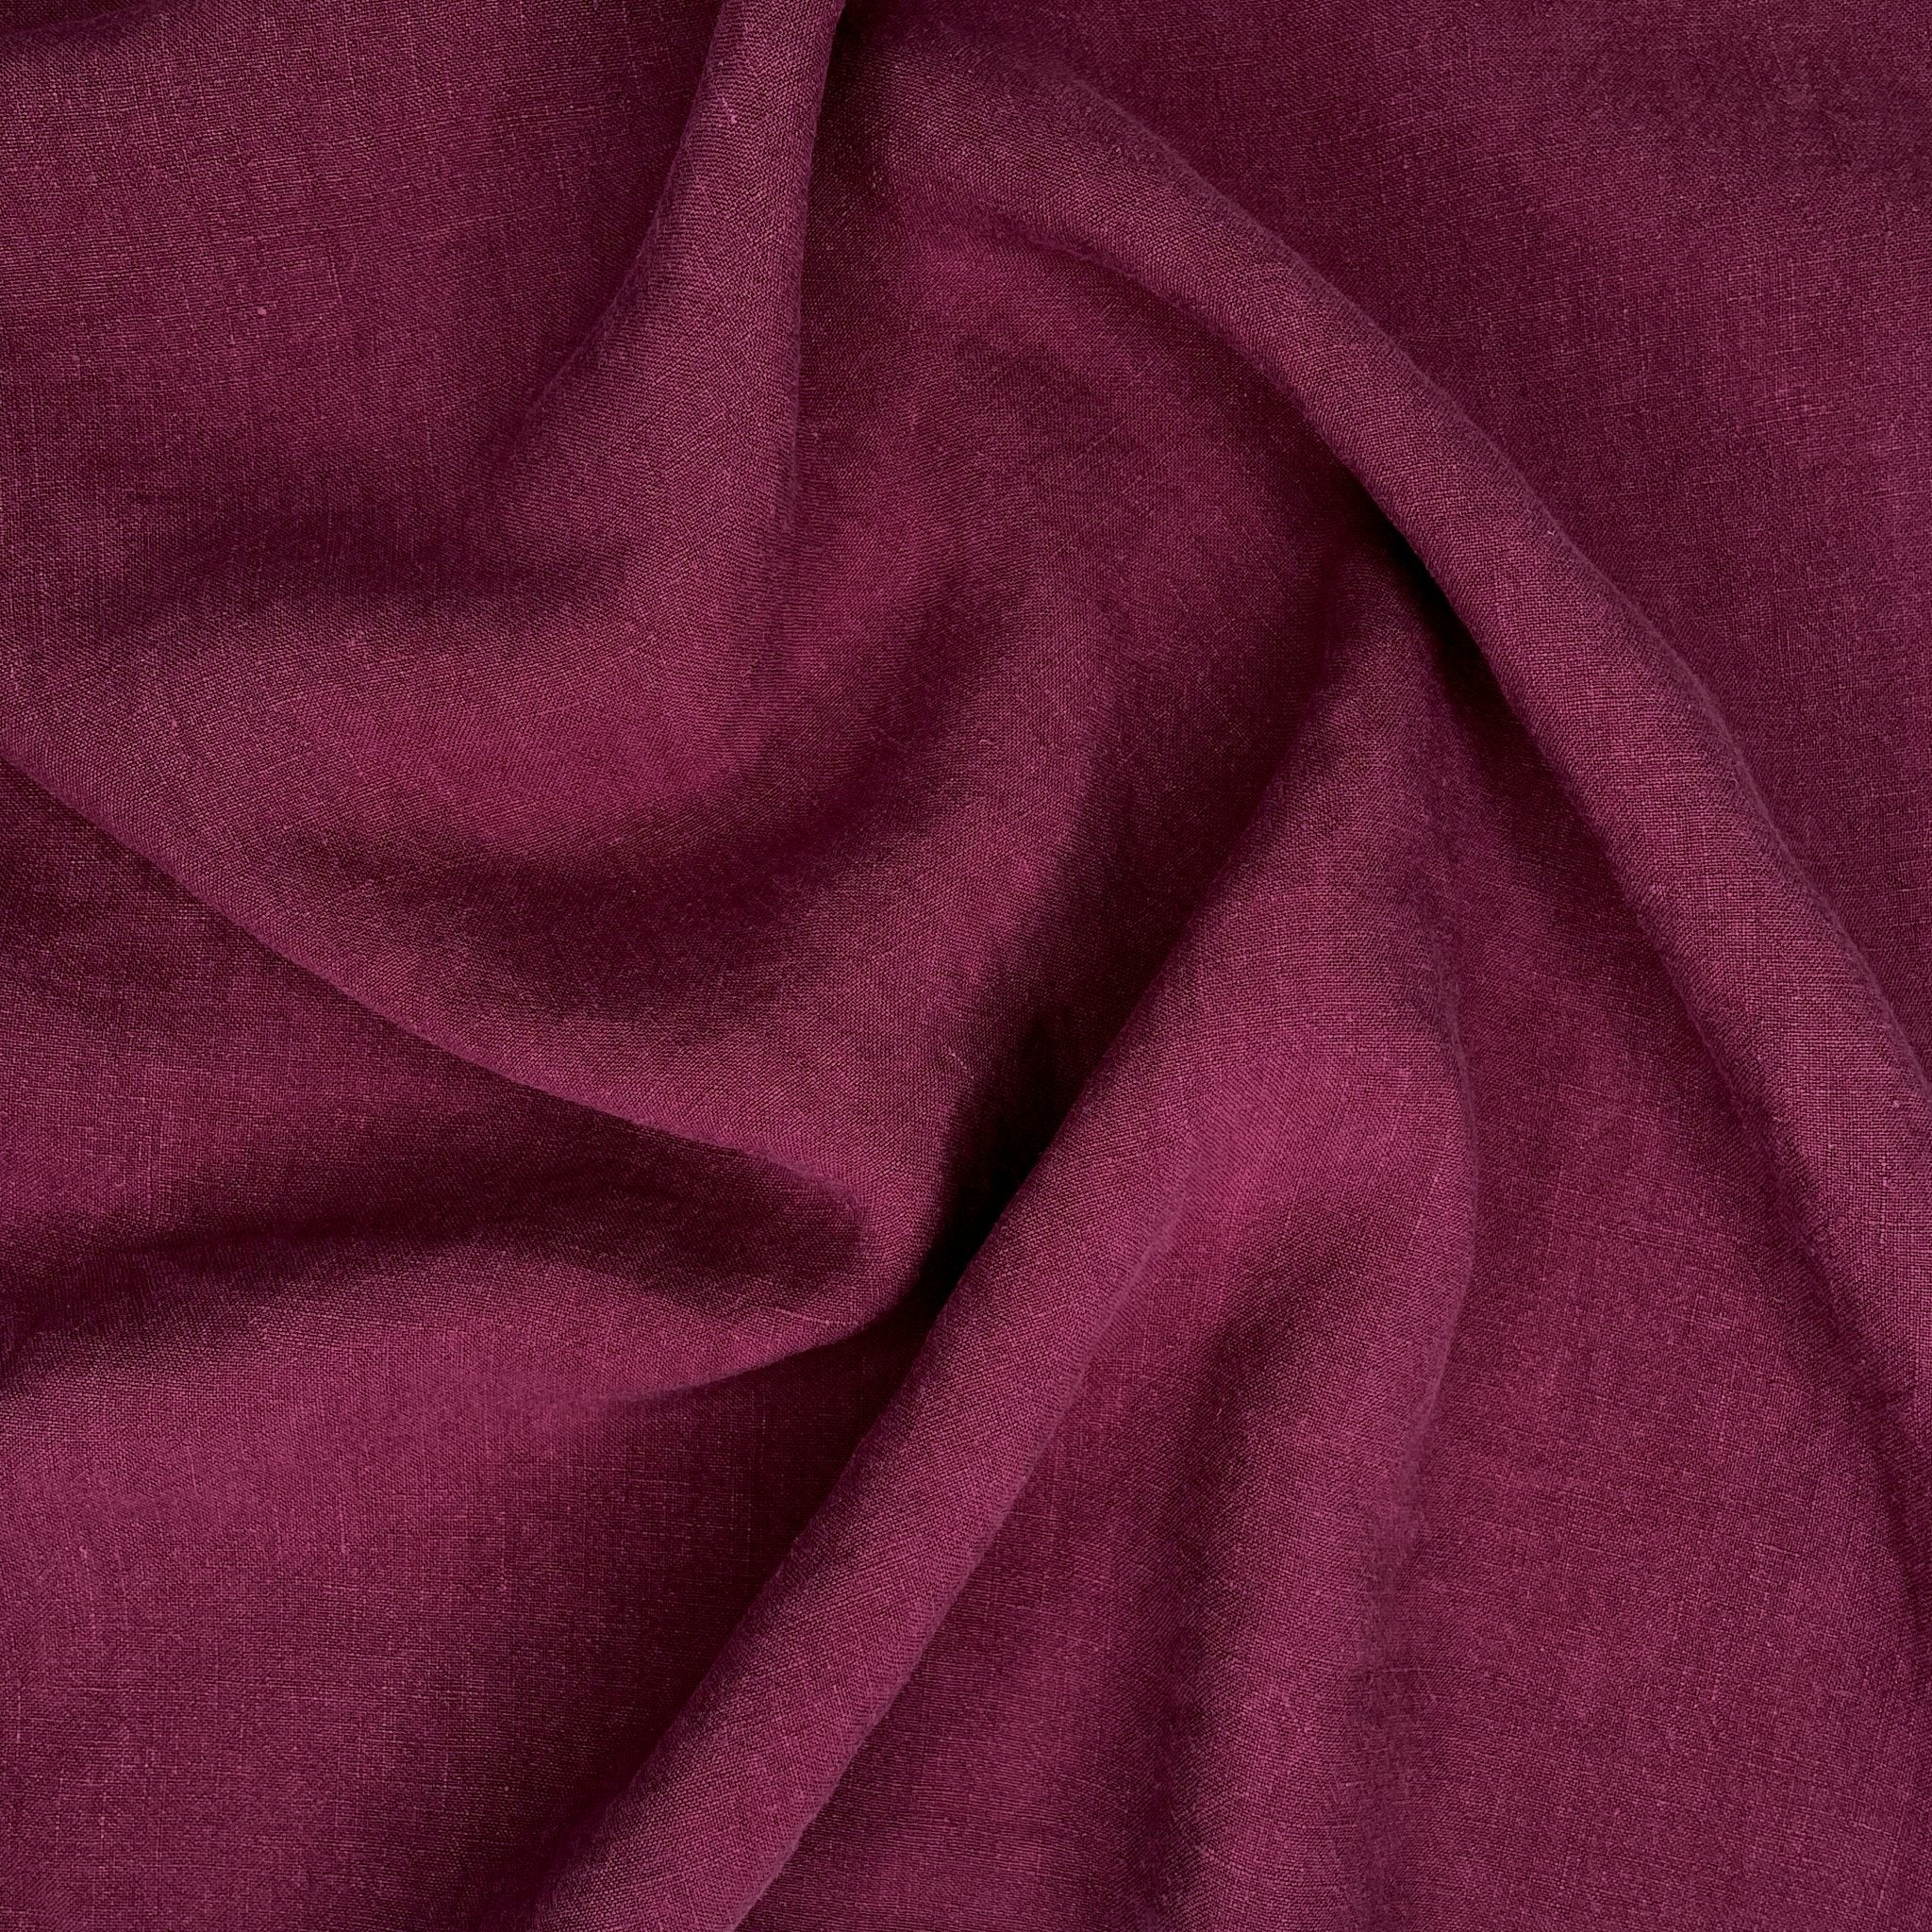 Ellis Washed Linen Wild Berry ½ yd-Fabric-Spool of Thread